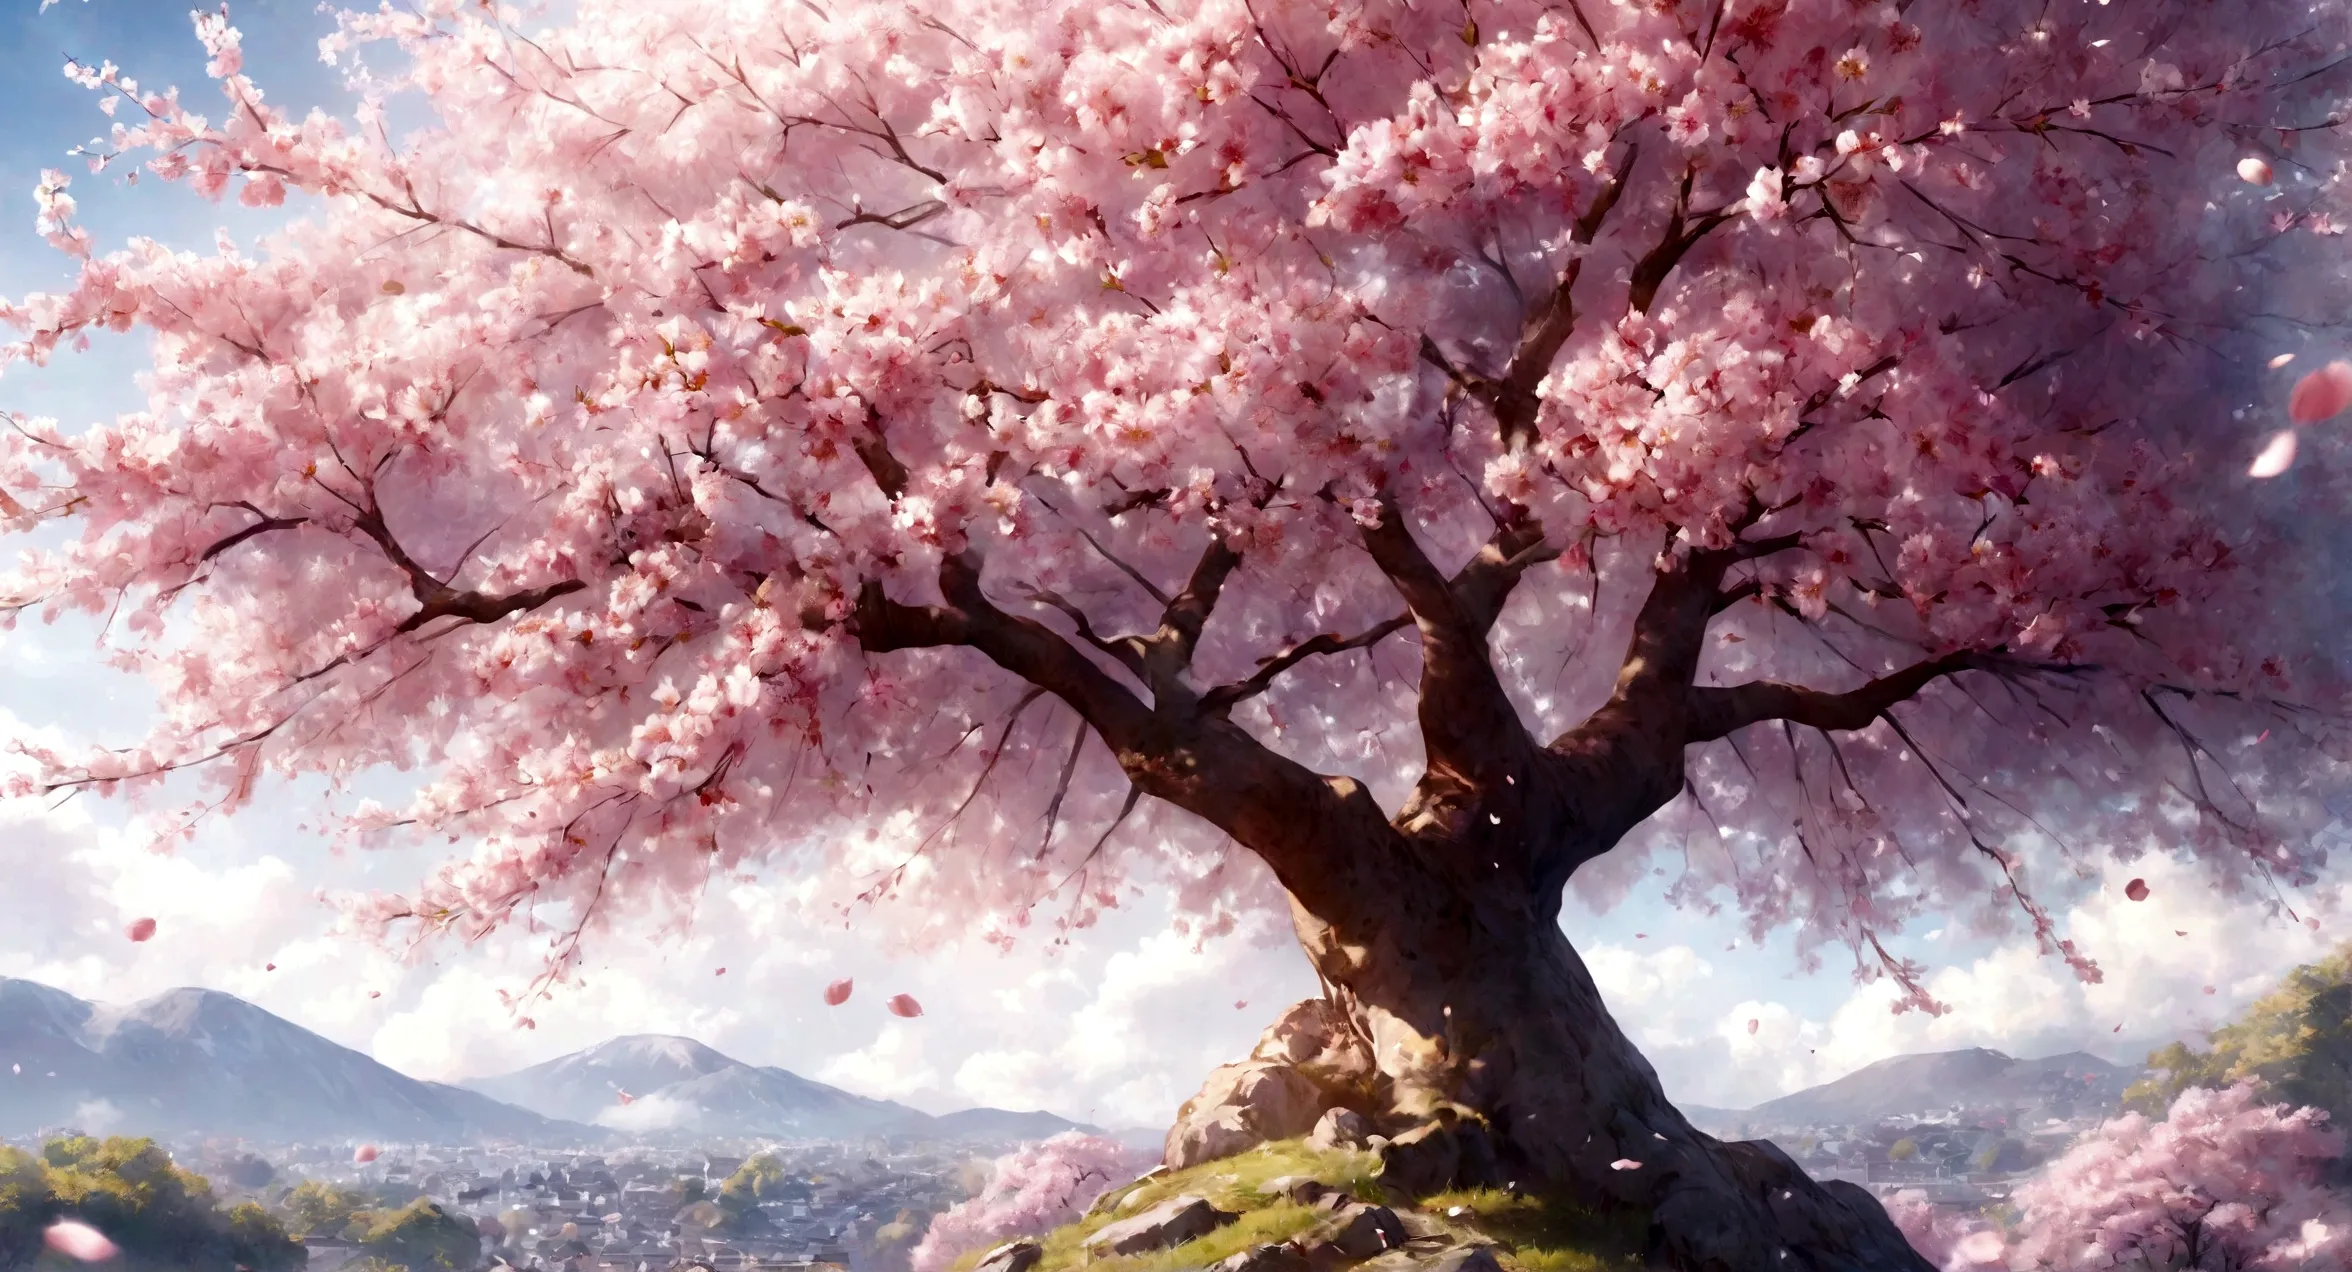 best quality,4k   very beautiful sakura tree, a positive photo, a very realistic photo, high detail,photo r3al,